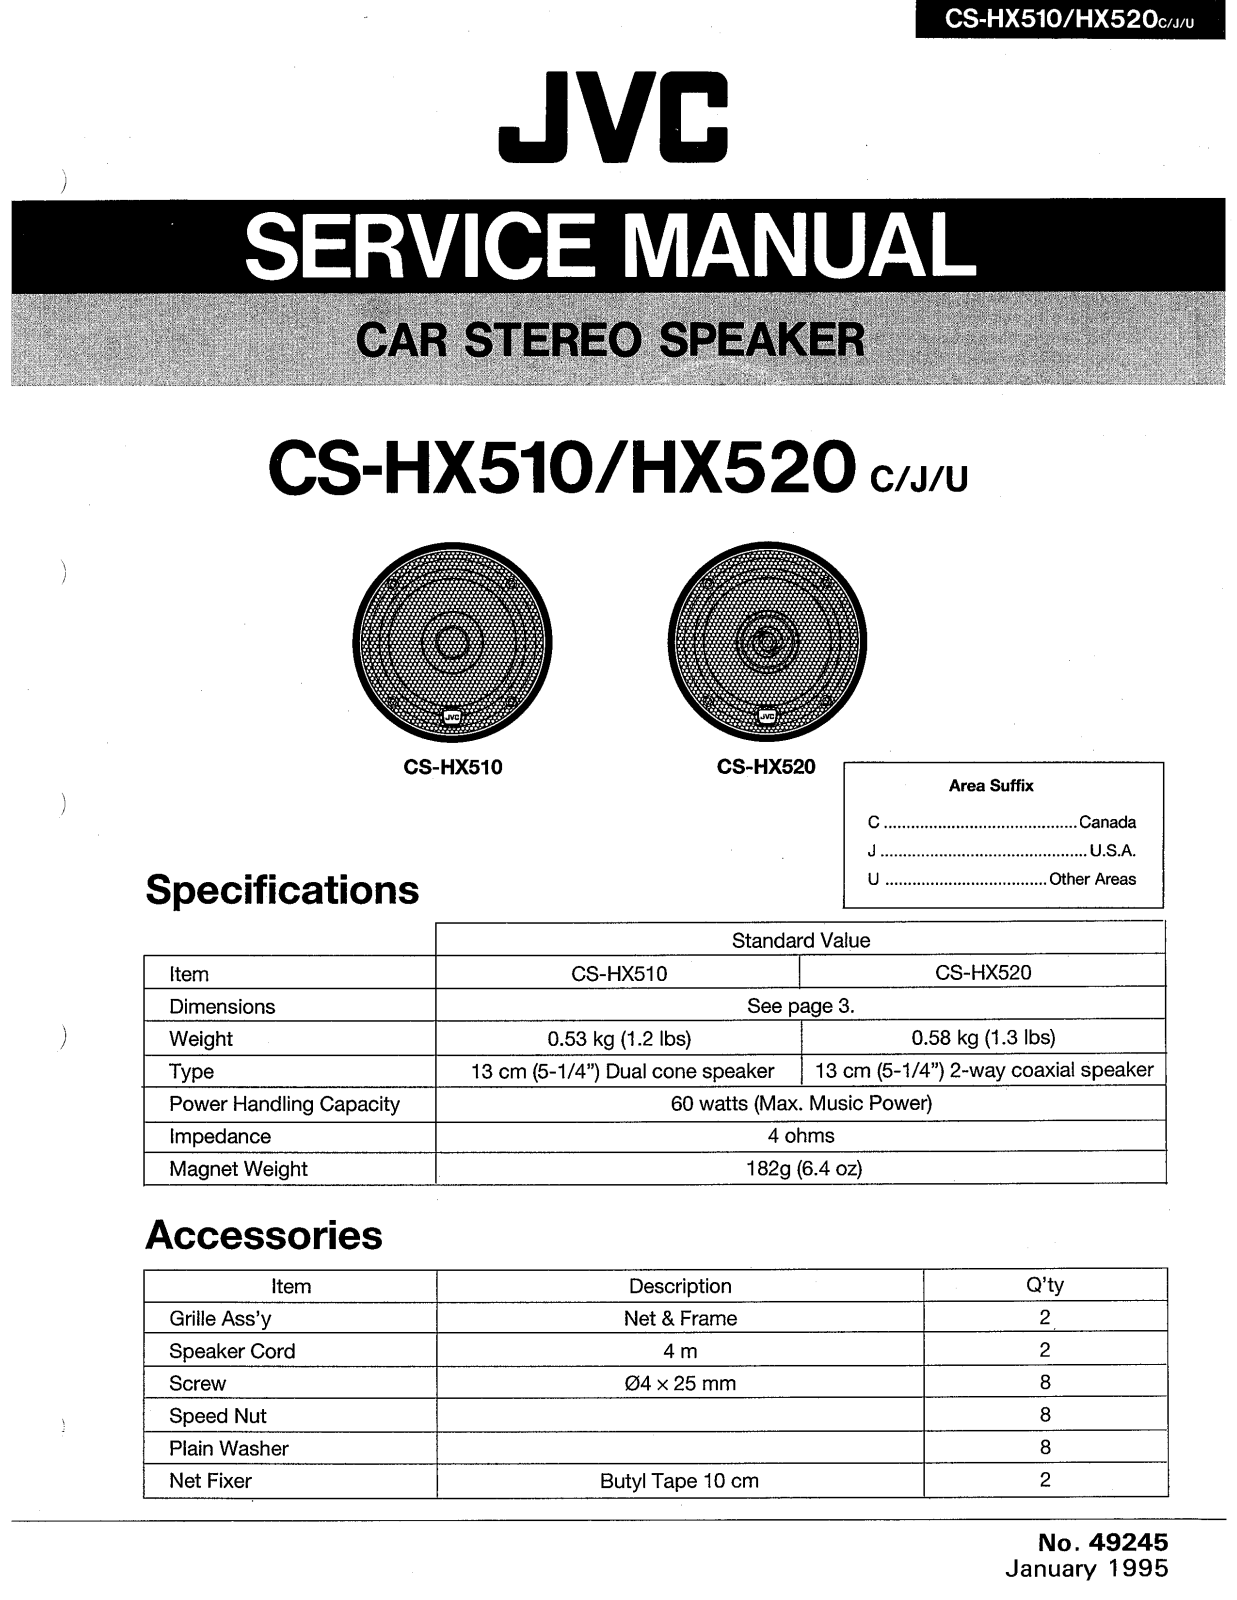 JVC CS-HX510C, CS-HX510J, CS-HX510U, CS-HX520C, CS-HX520J Service Manual